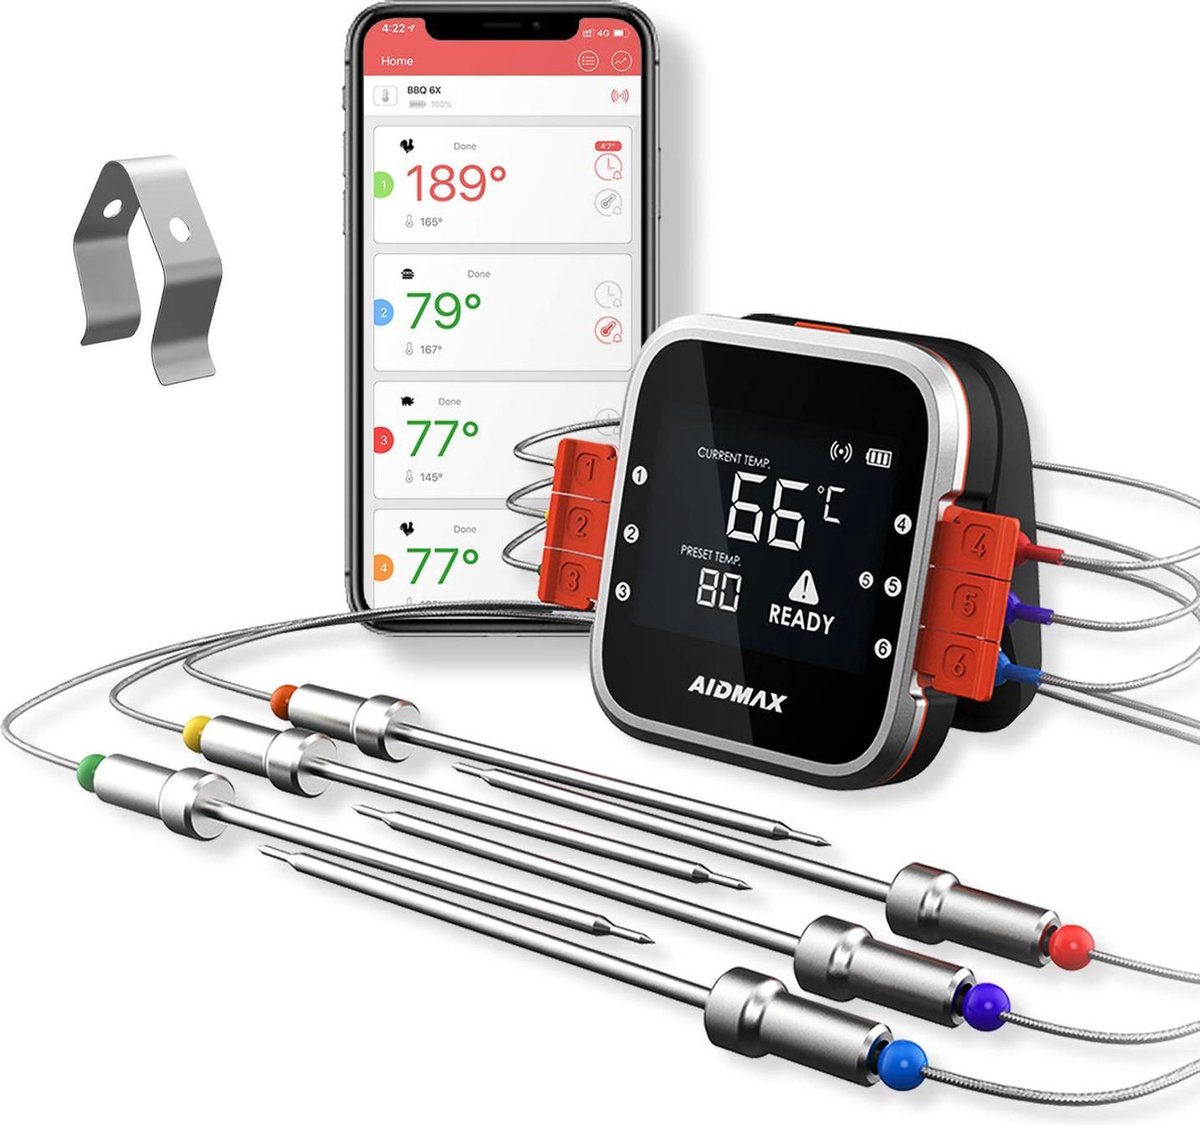 genie Ladder komen Bluetooth vlees thermometer met app - Aidmax